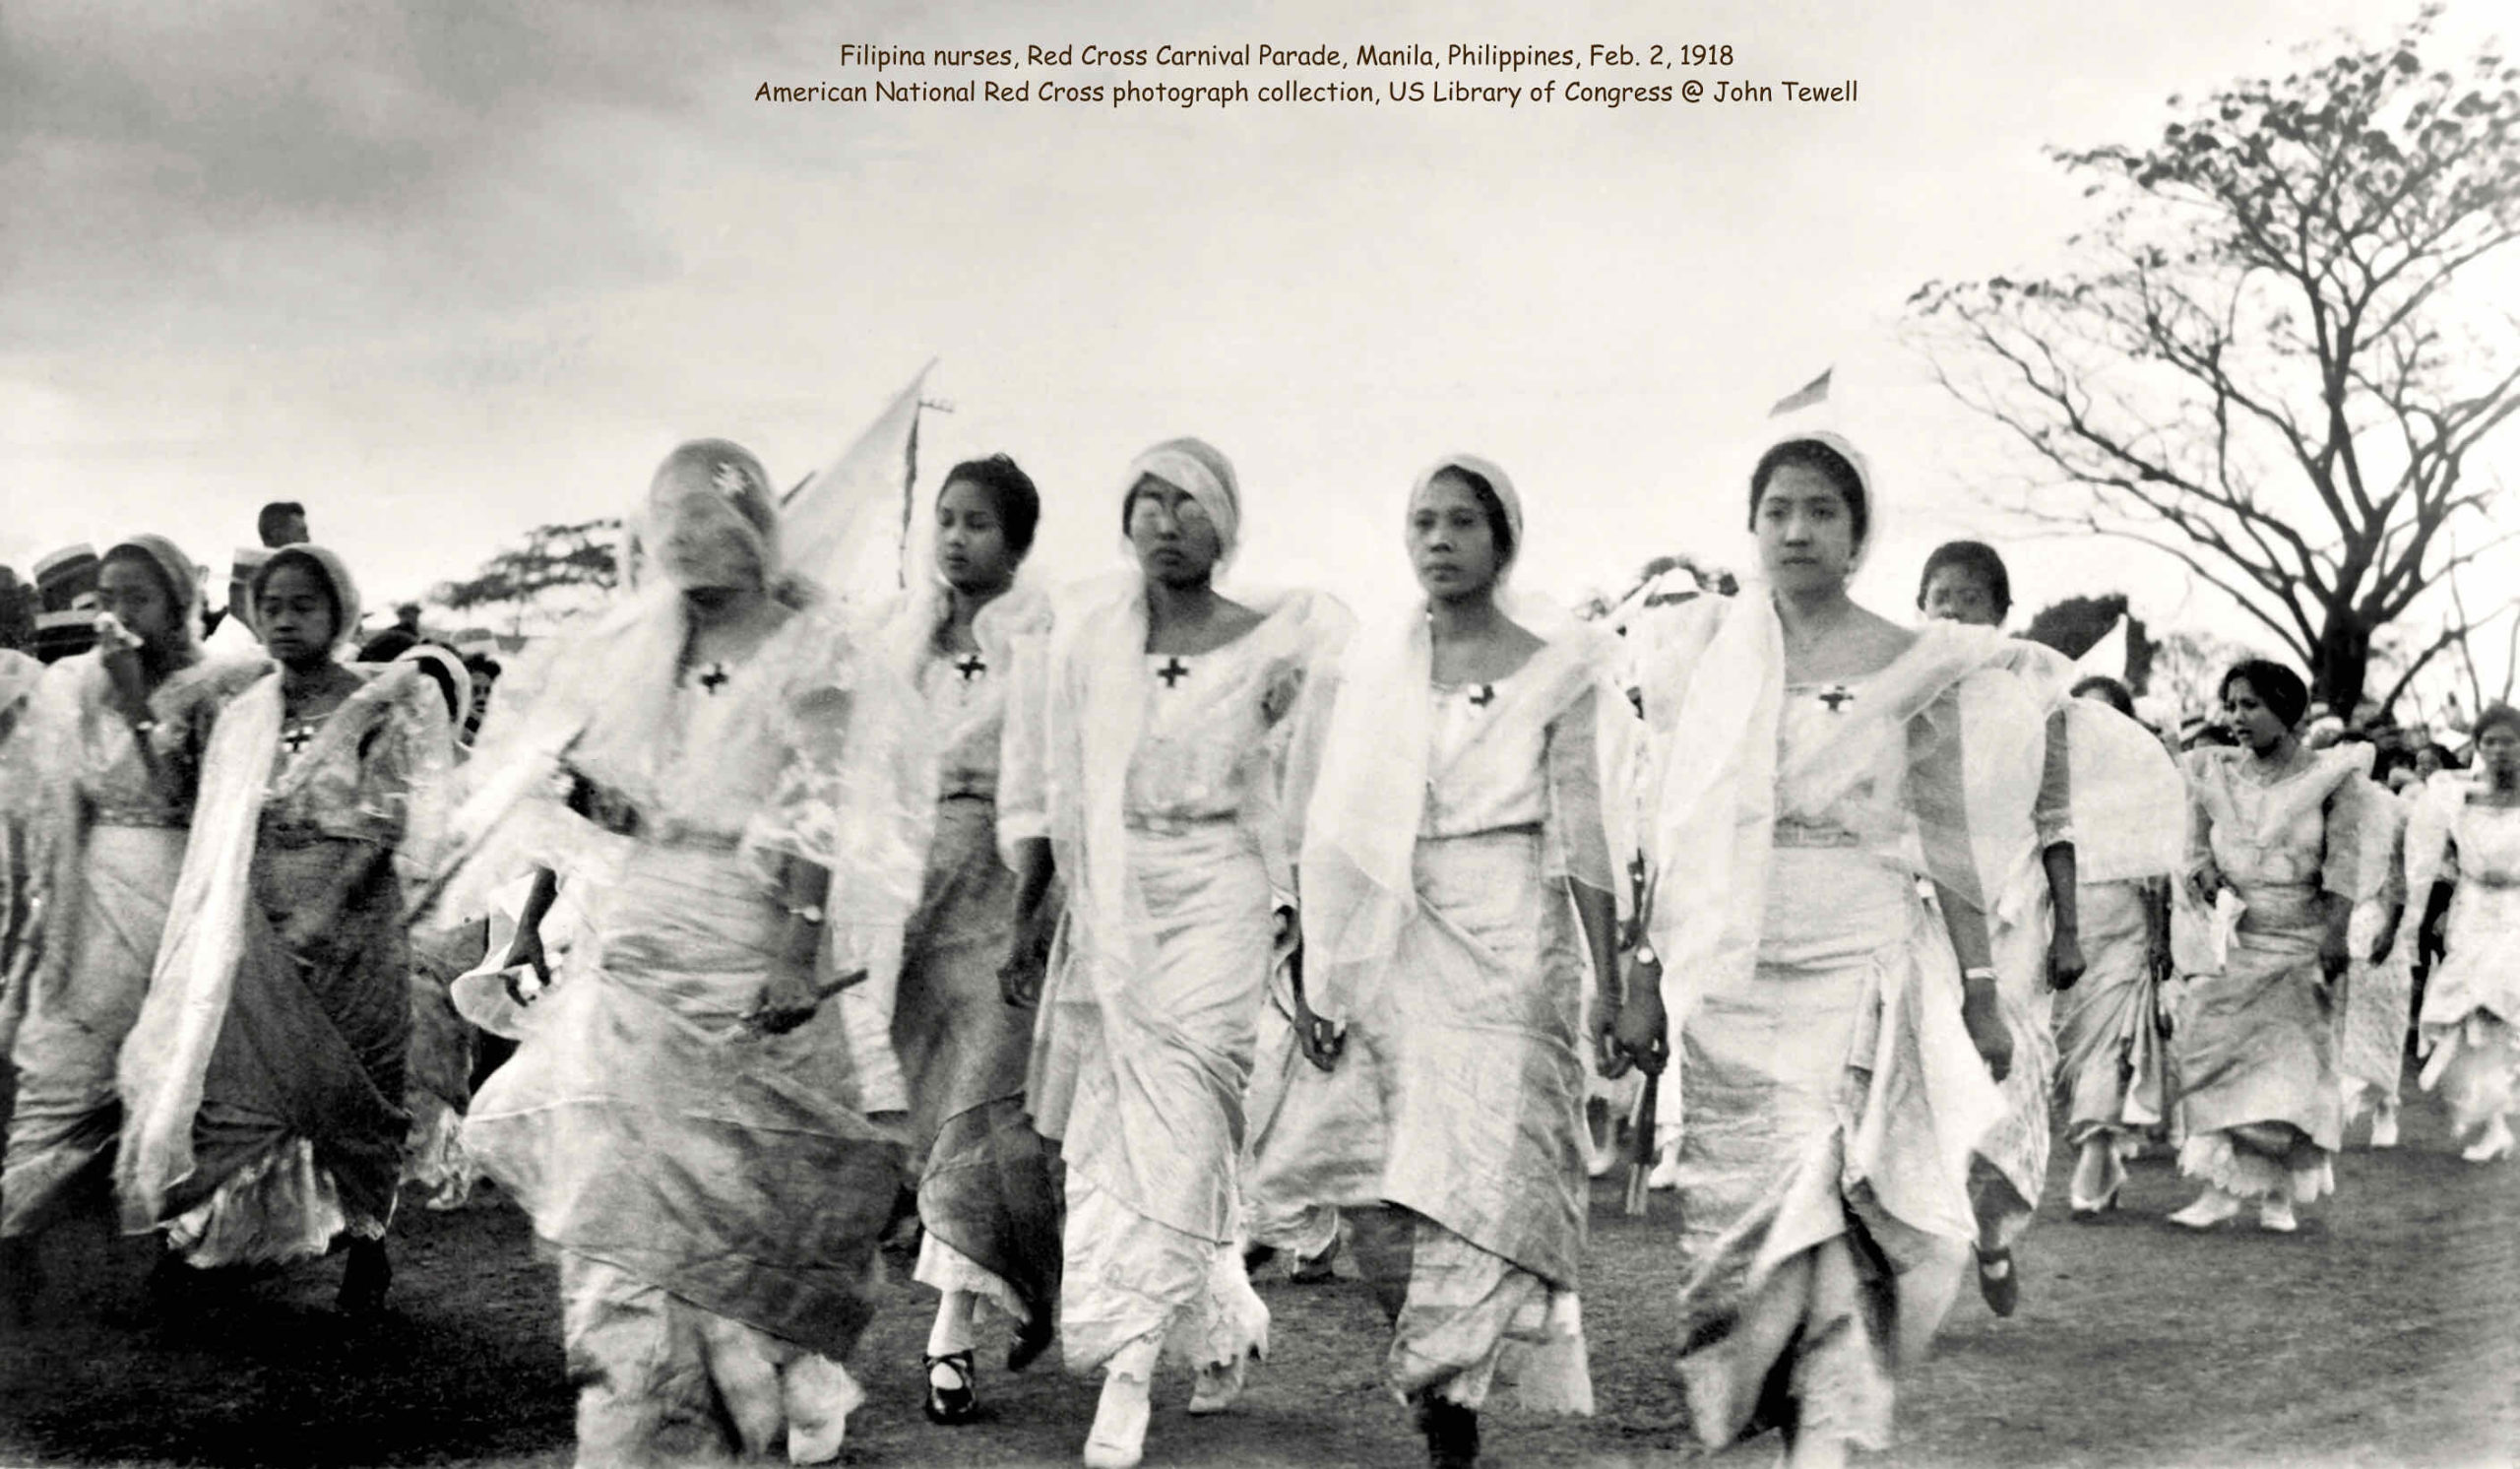 Filipina nurses, Red Cross Carnival Parade, Manila, Philippines, Feb. 2, 1918.